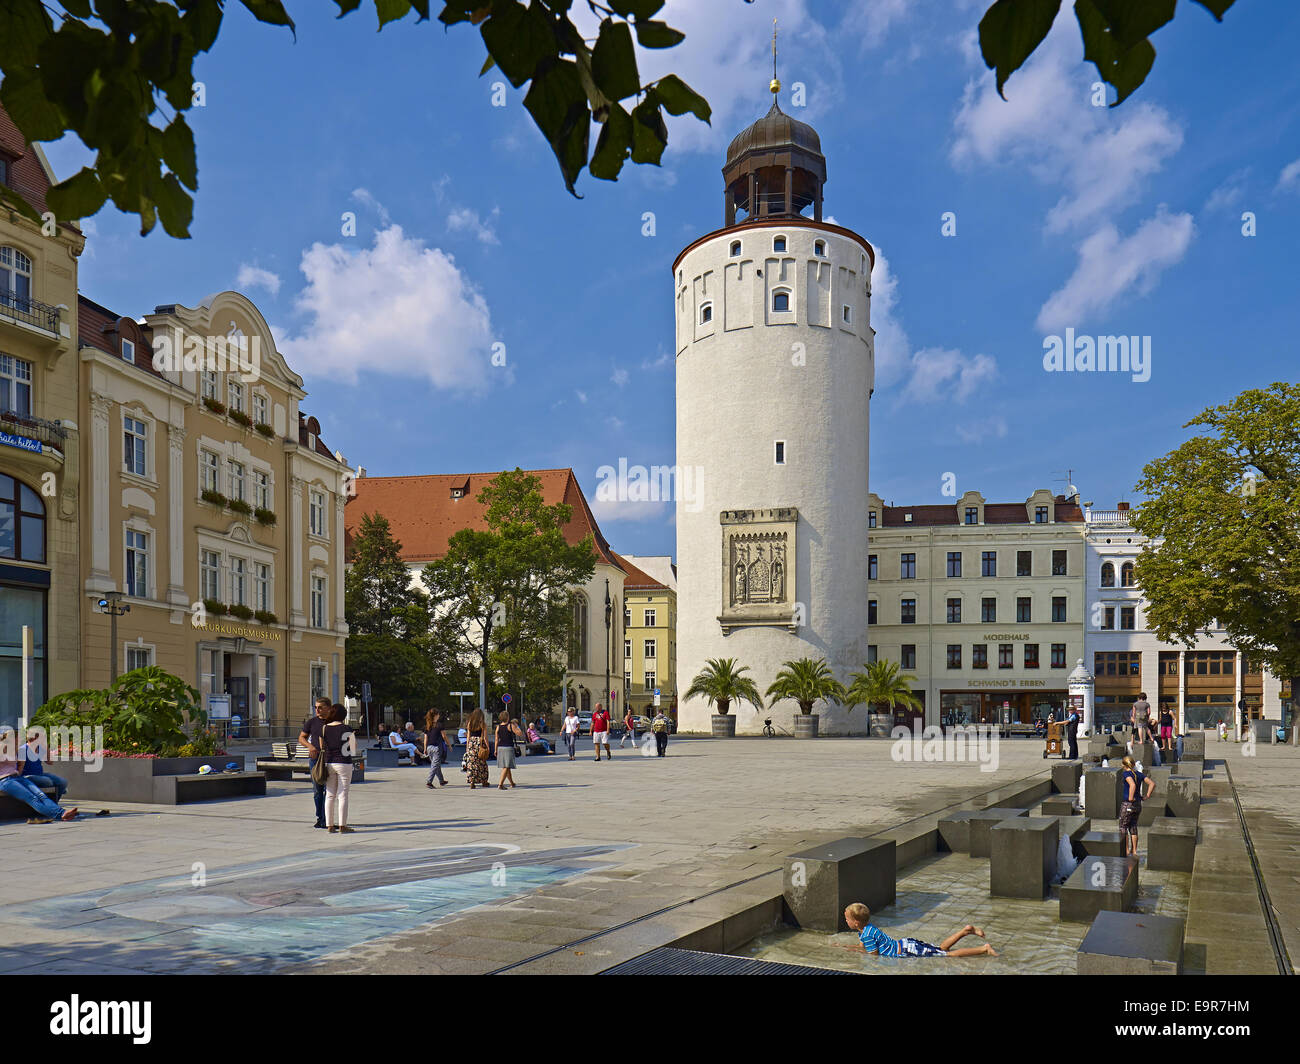 Marienplatz square and Dicker Turm tower in Görlitz, Germany Stock Photo